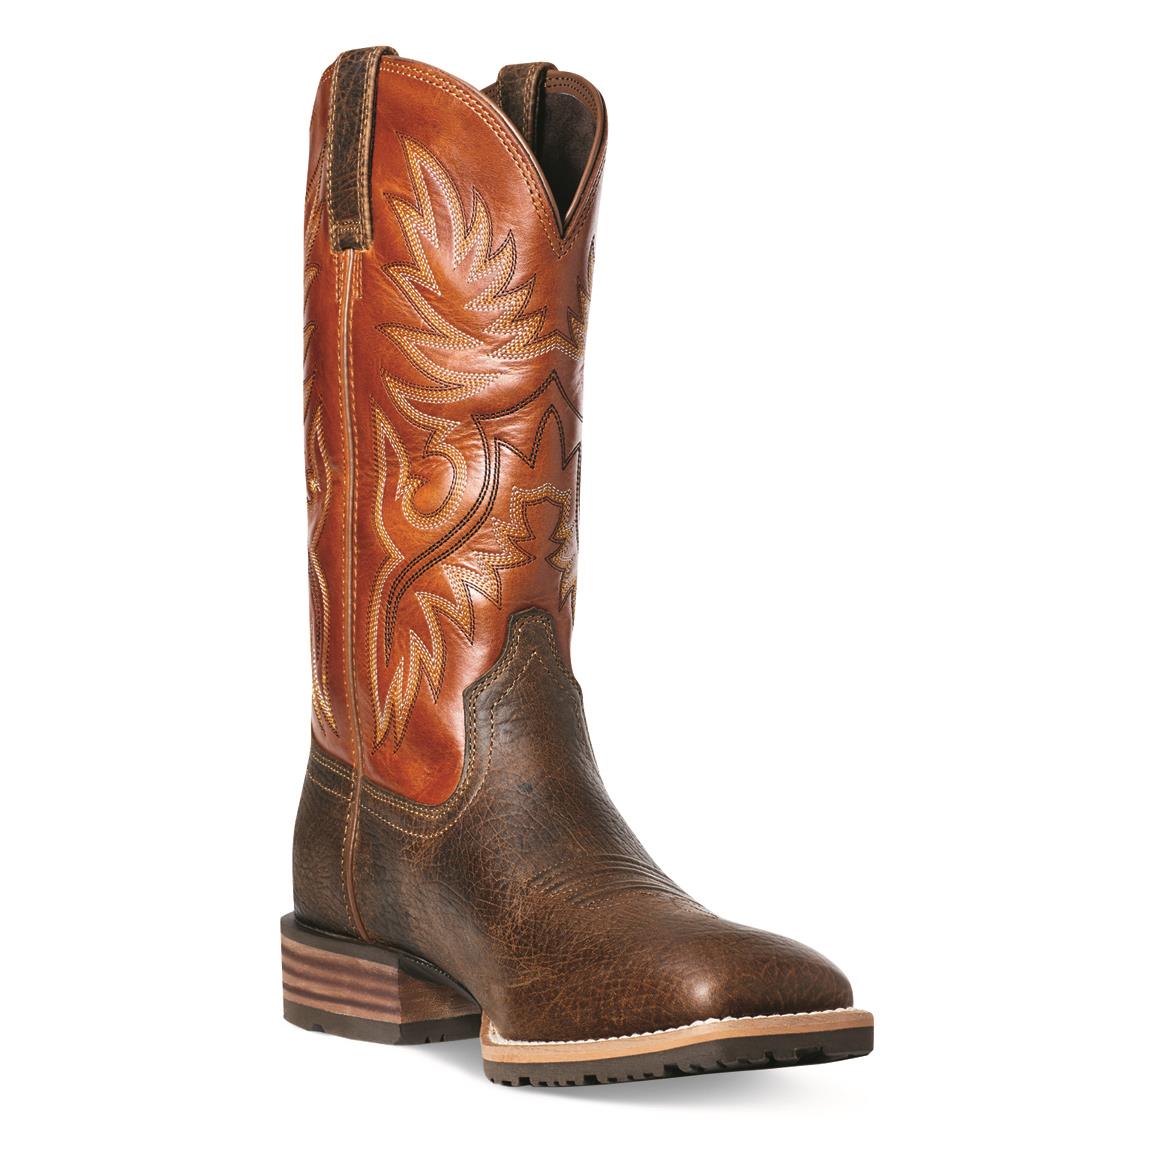 Ariat Men's Hybrid Big Boy Western Boots, Earth/orange